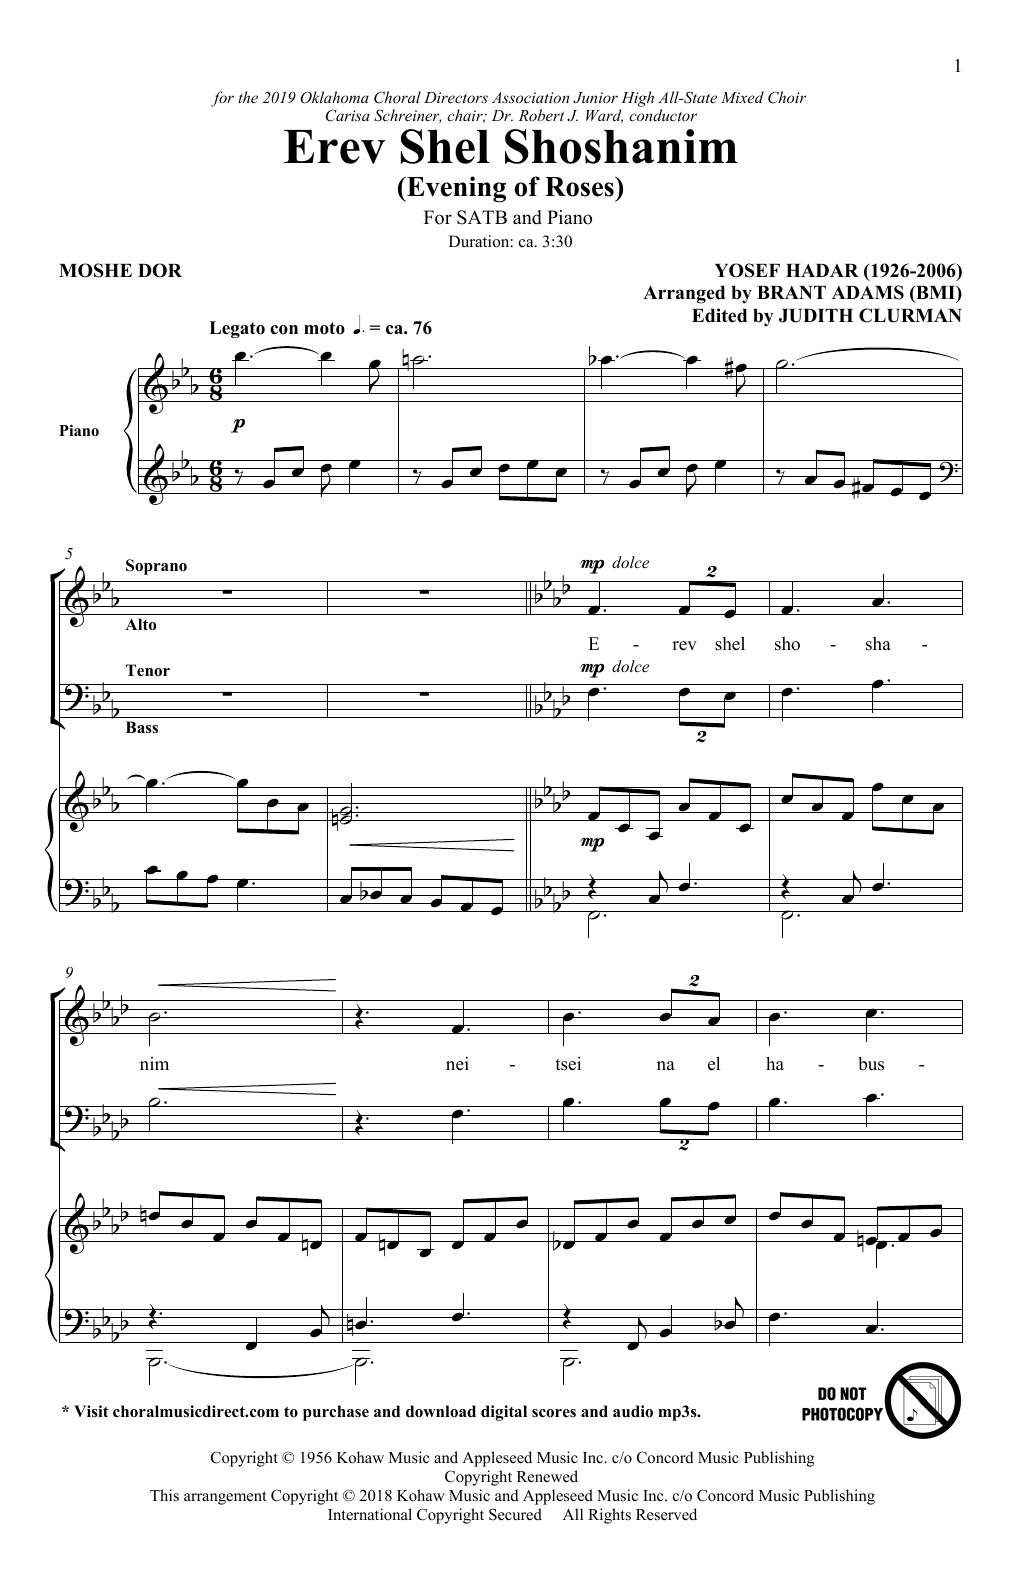 Moshe Dor & Yosef Hadar Erev Shel Shoshanim (arr. Brant Adams) Sheet Music Notes & Chords for SATB Choir - Download or Print PDF